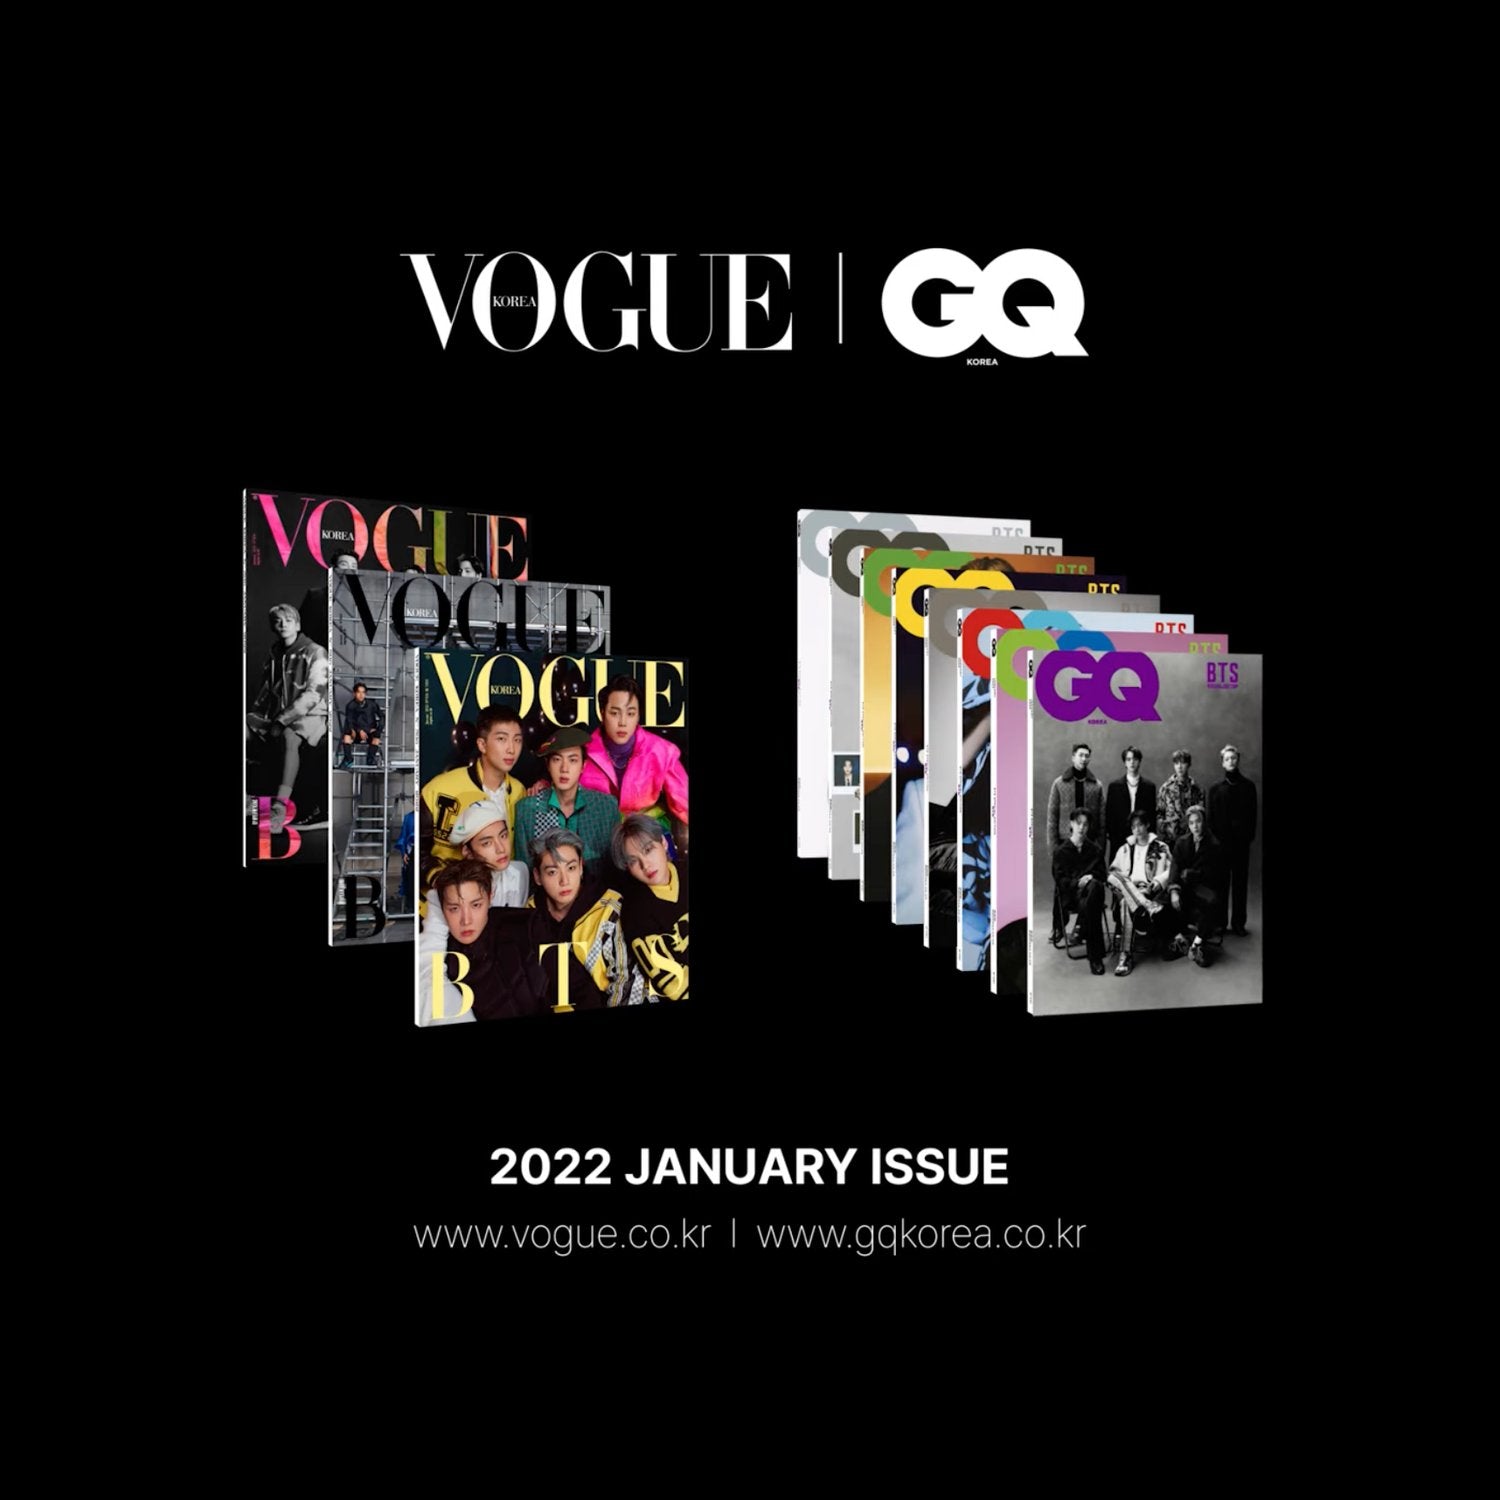 Suga in Vogue and GQ Korea x Louis Vuitton Photoshoot 